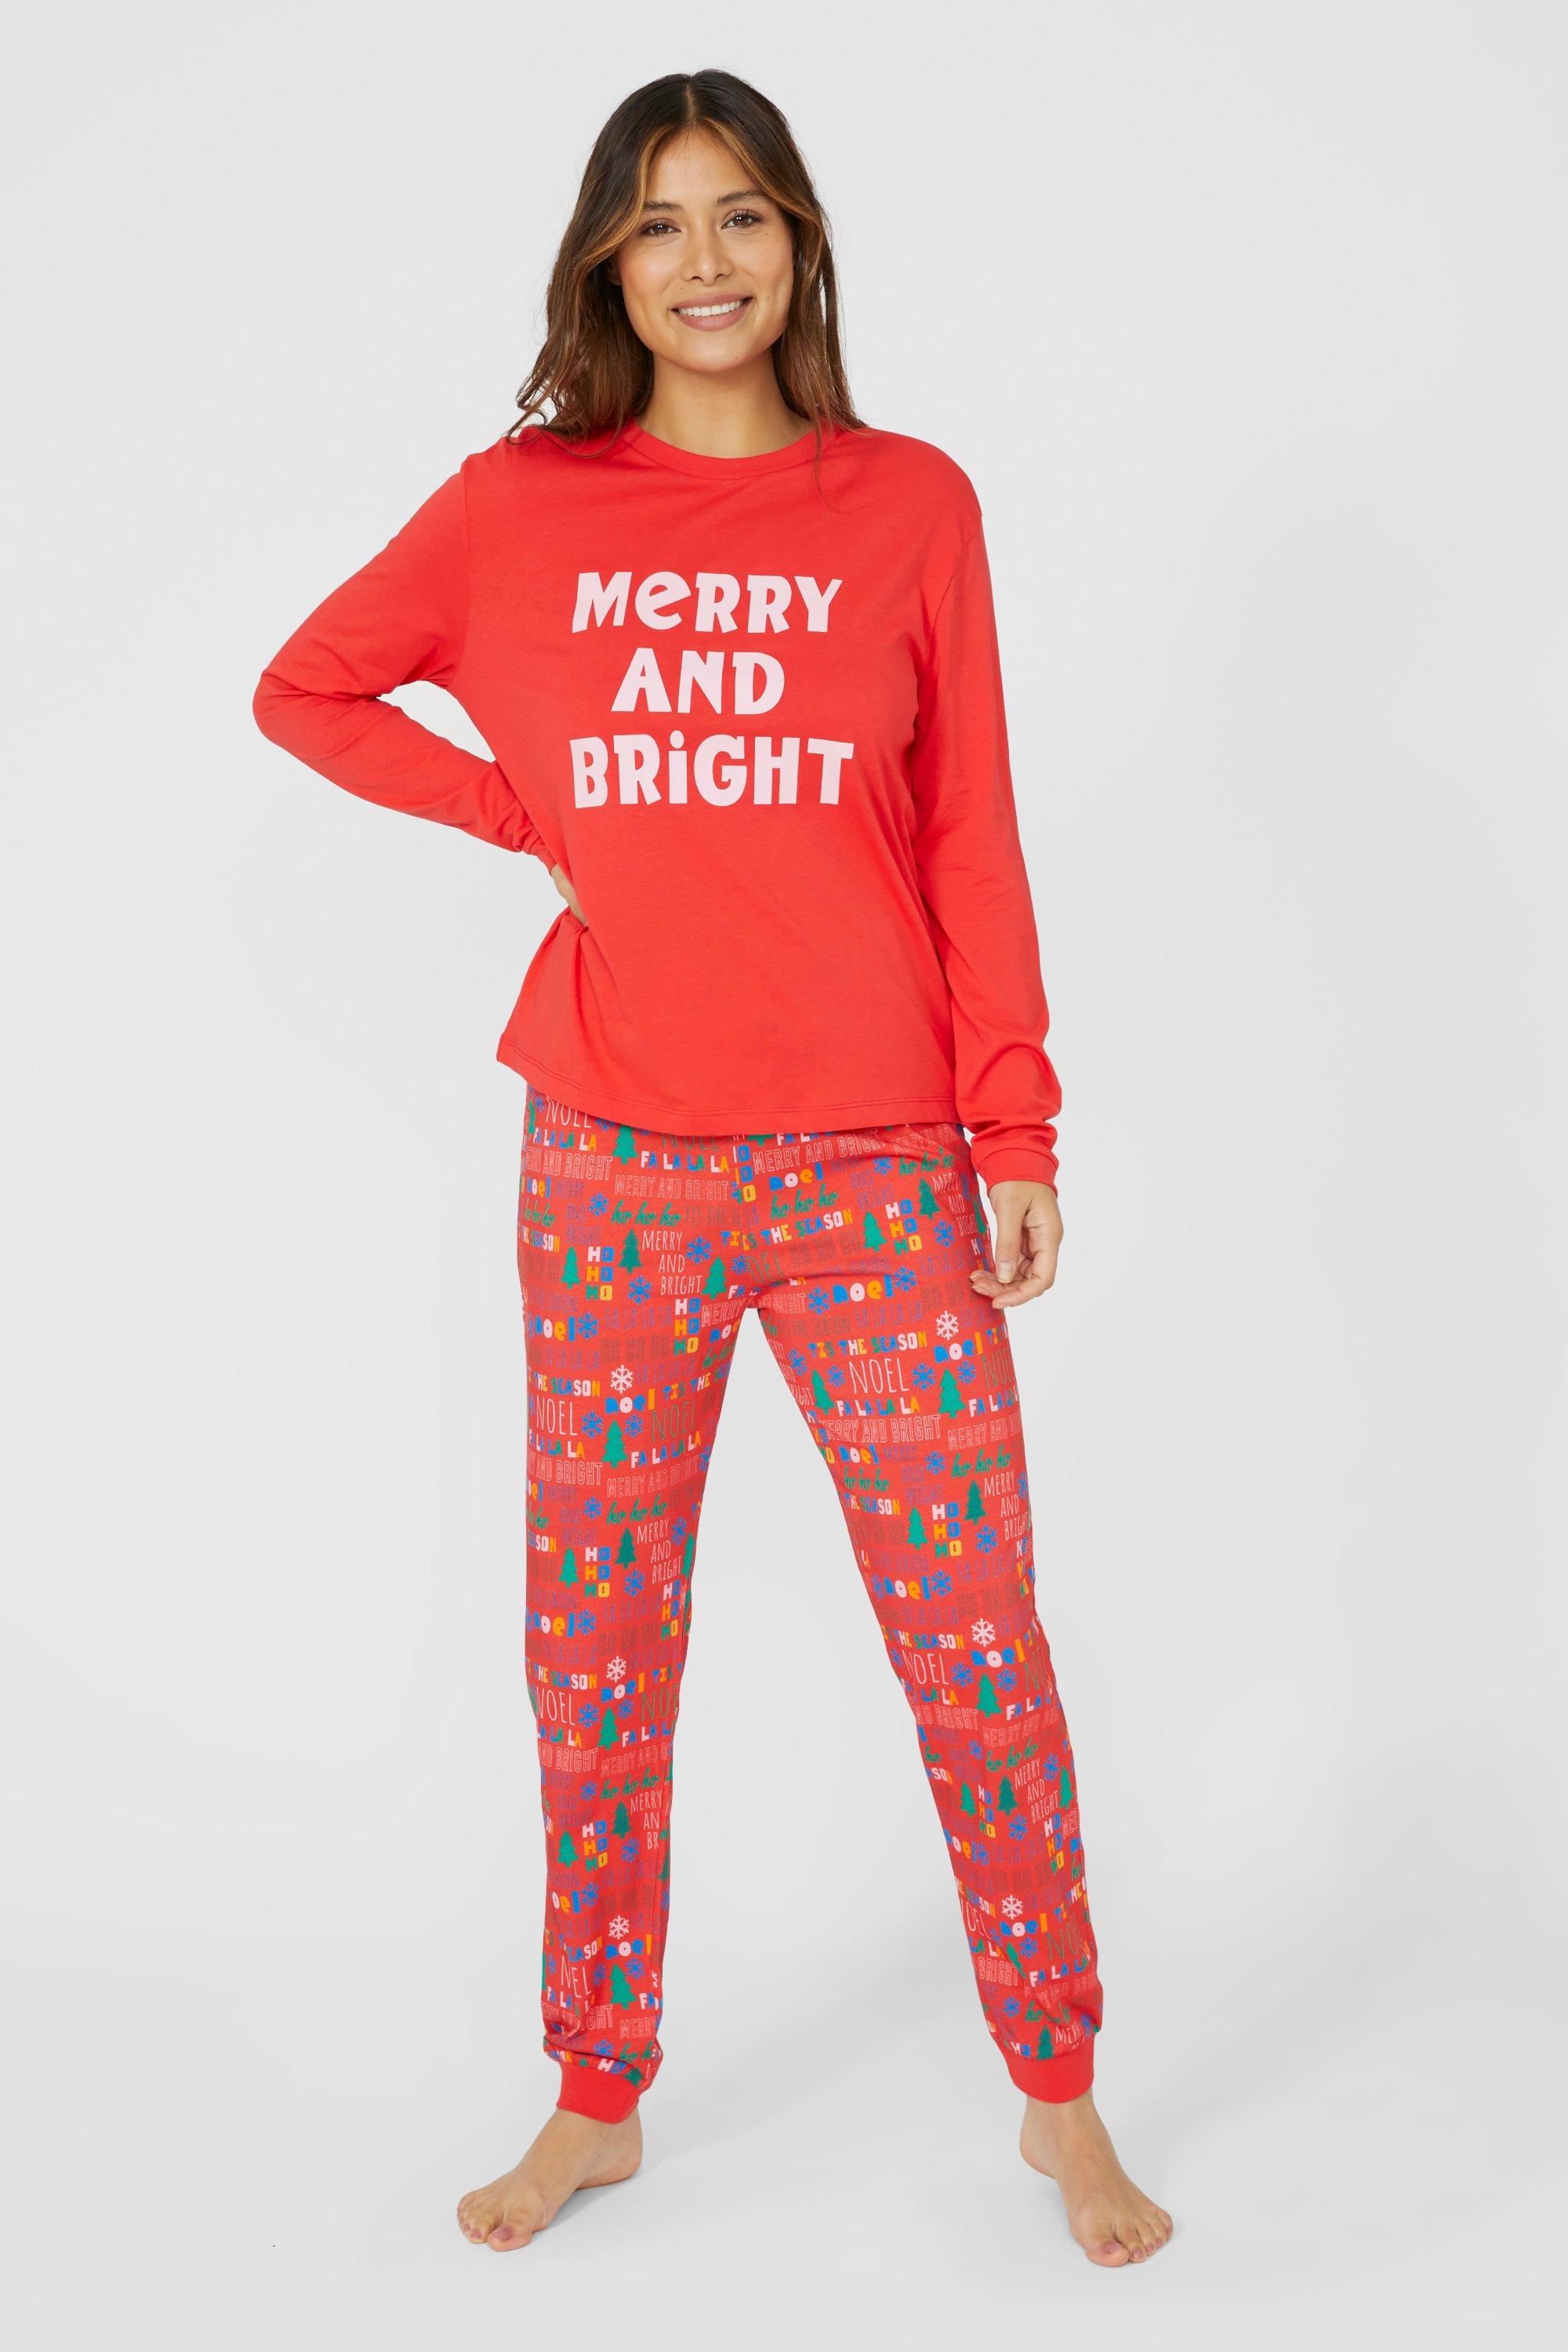 Ladies Family Christmas PJ - Merry & Bright